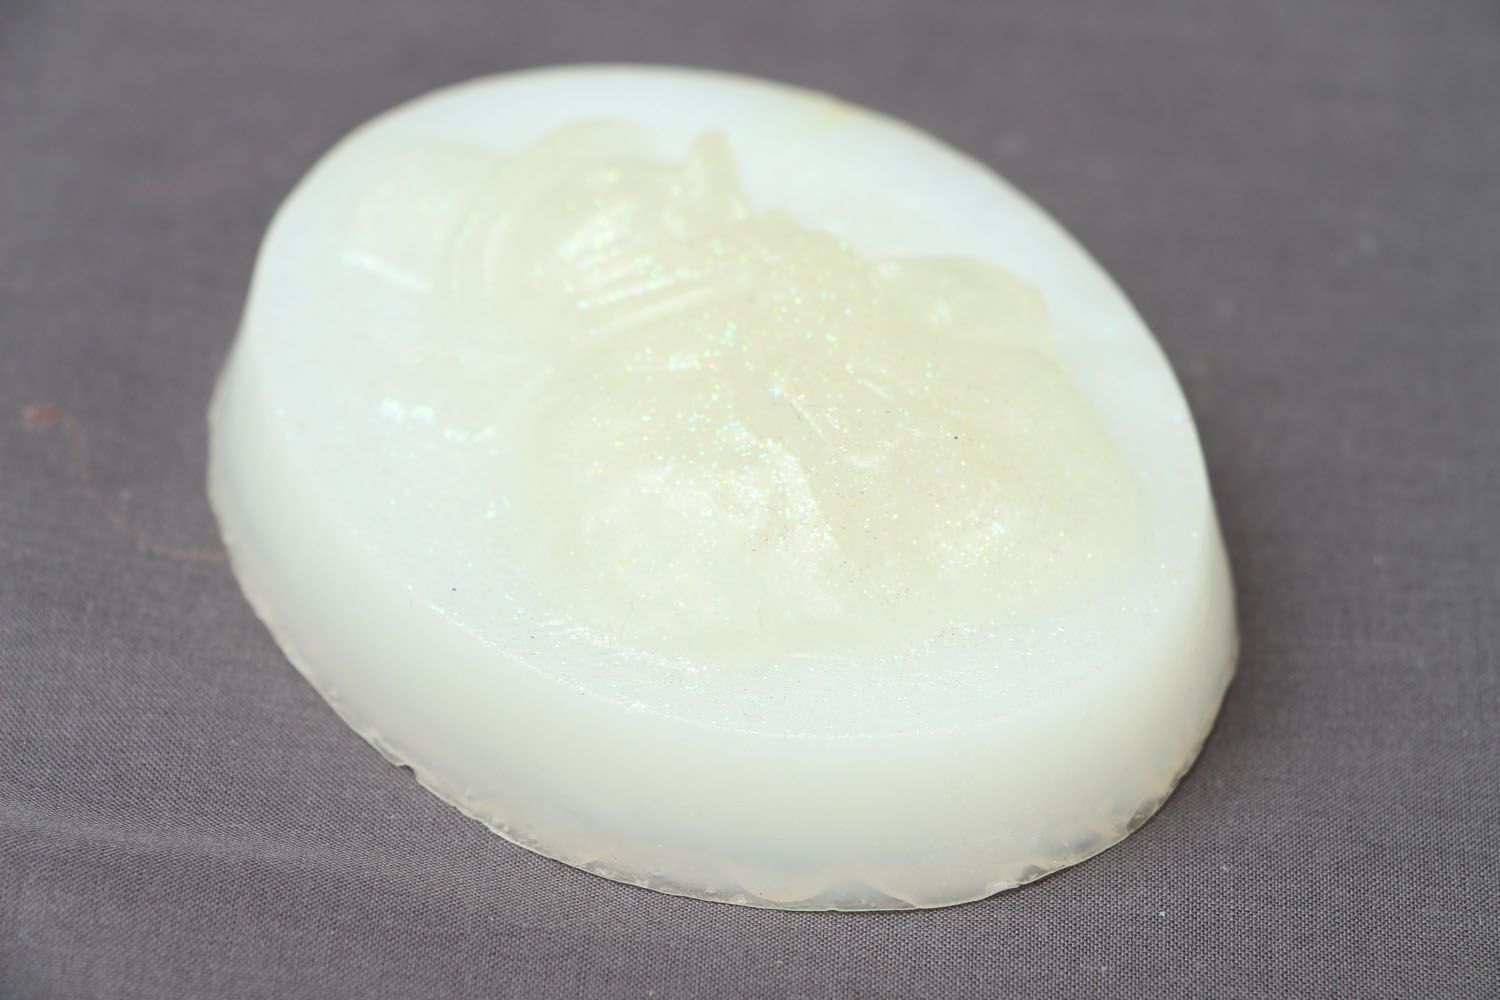 Homemade white soap photo 2